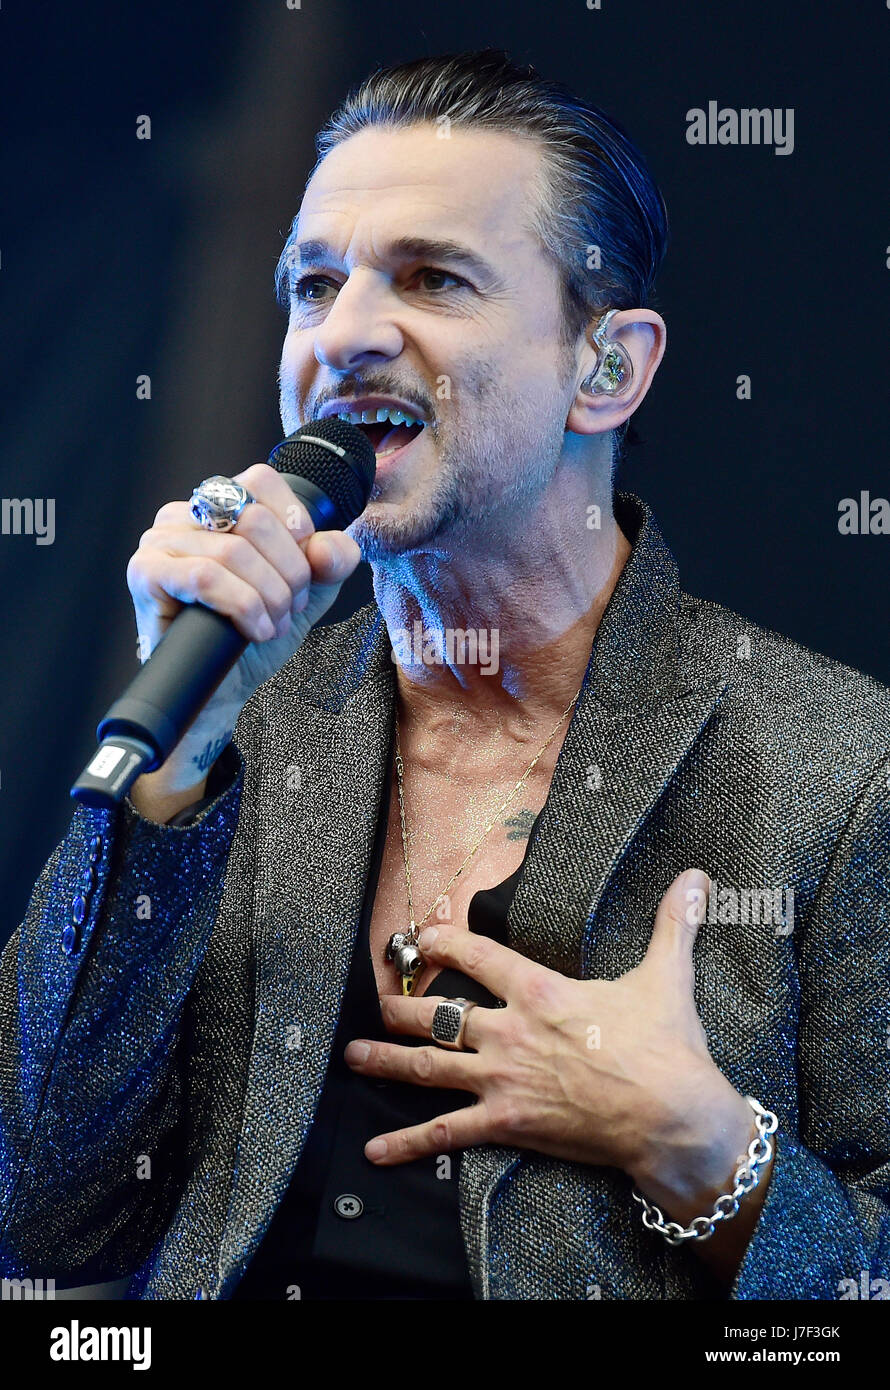 Singer david gahan depeche mode hi-res stock photography and images - Alamy